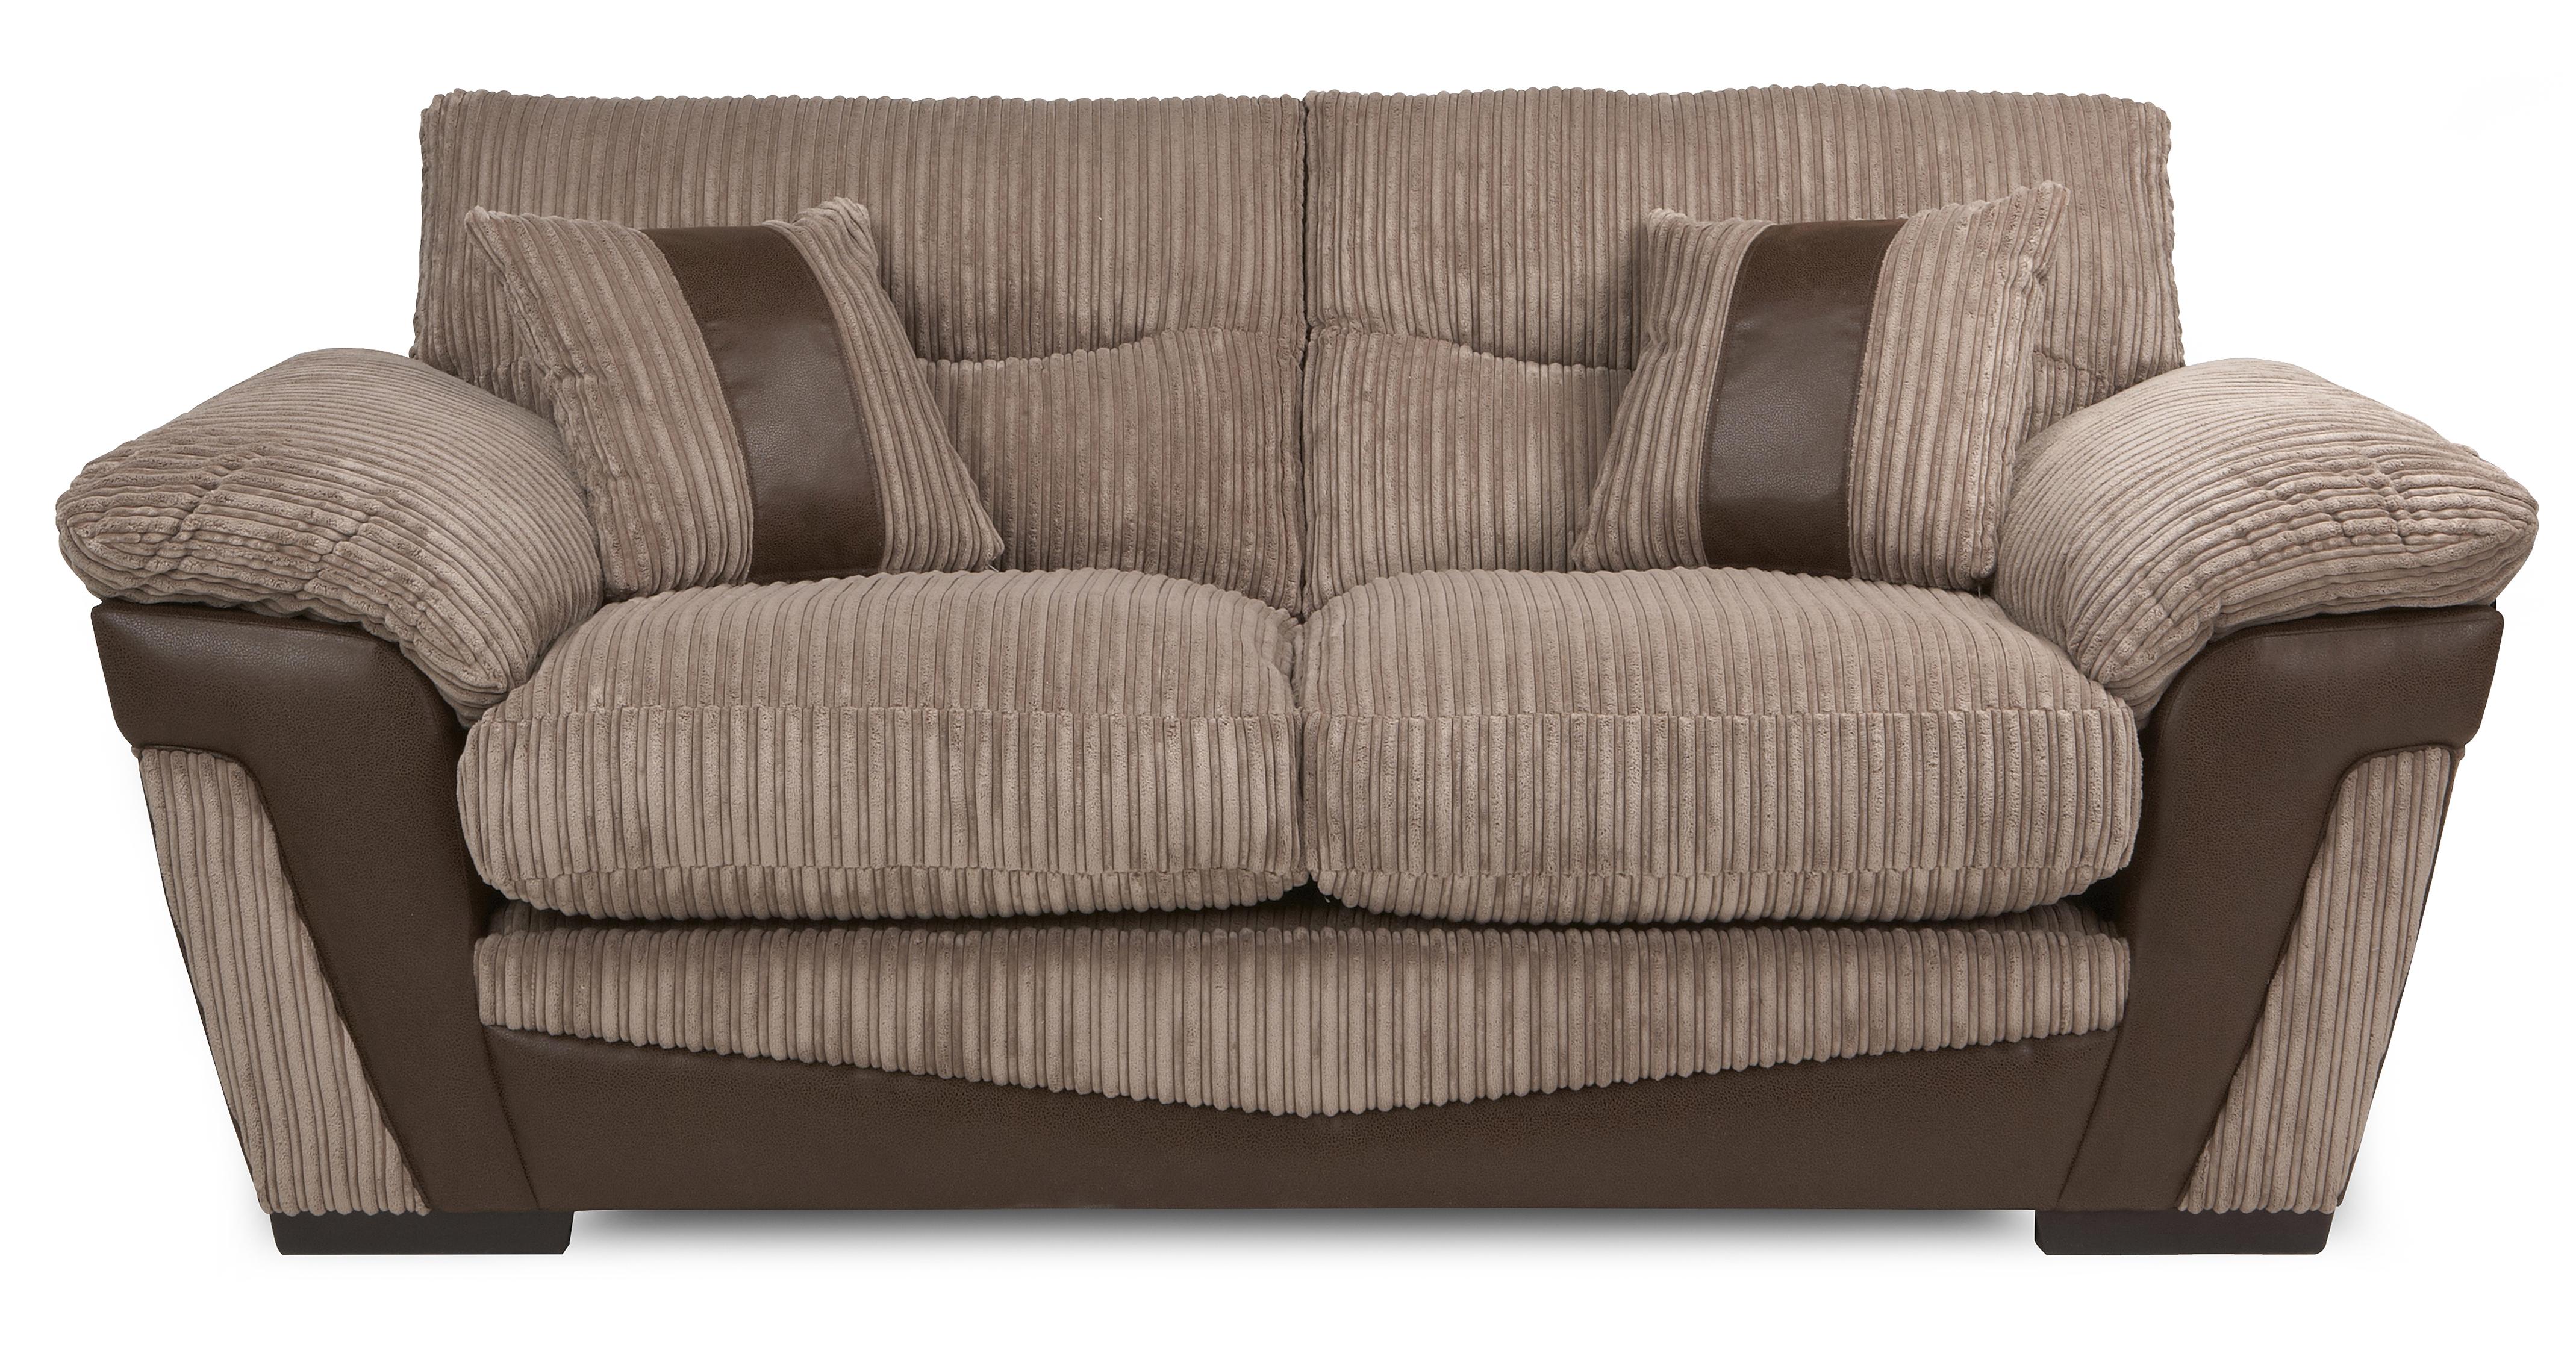 2 seater sofa bed ebay